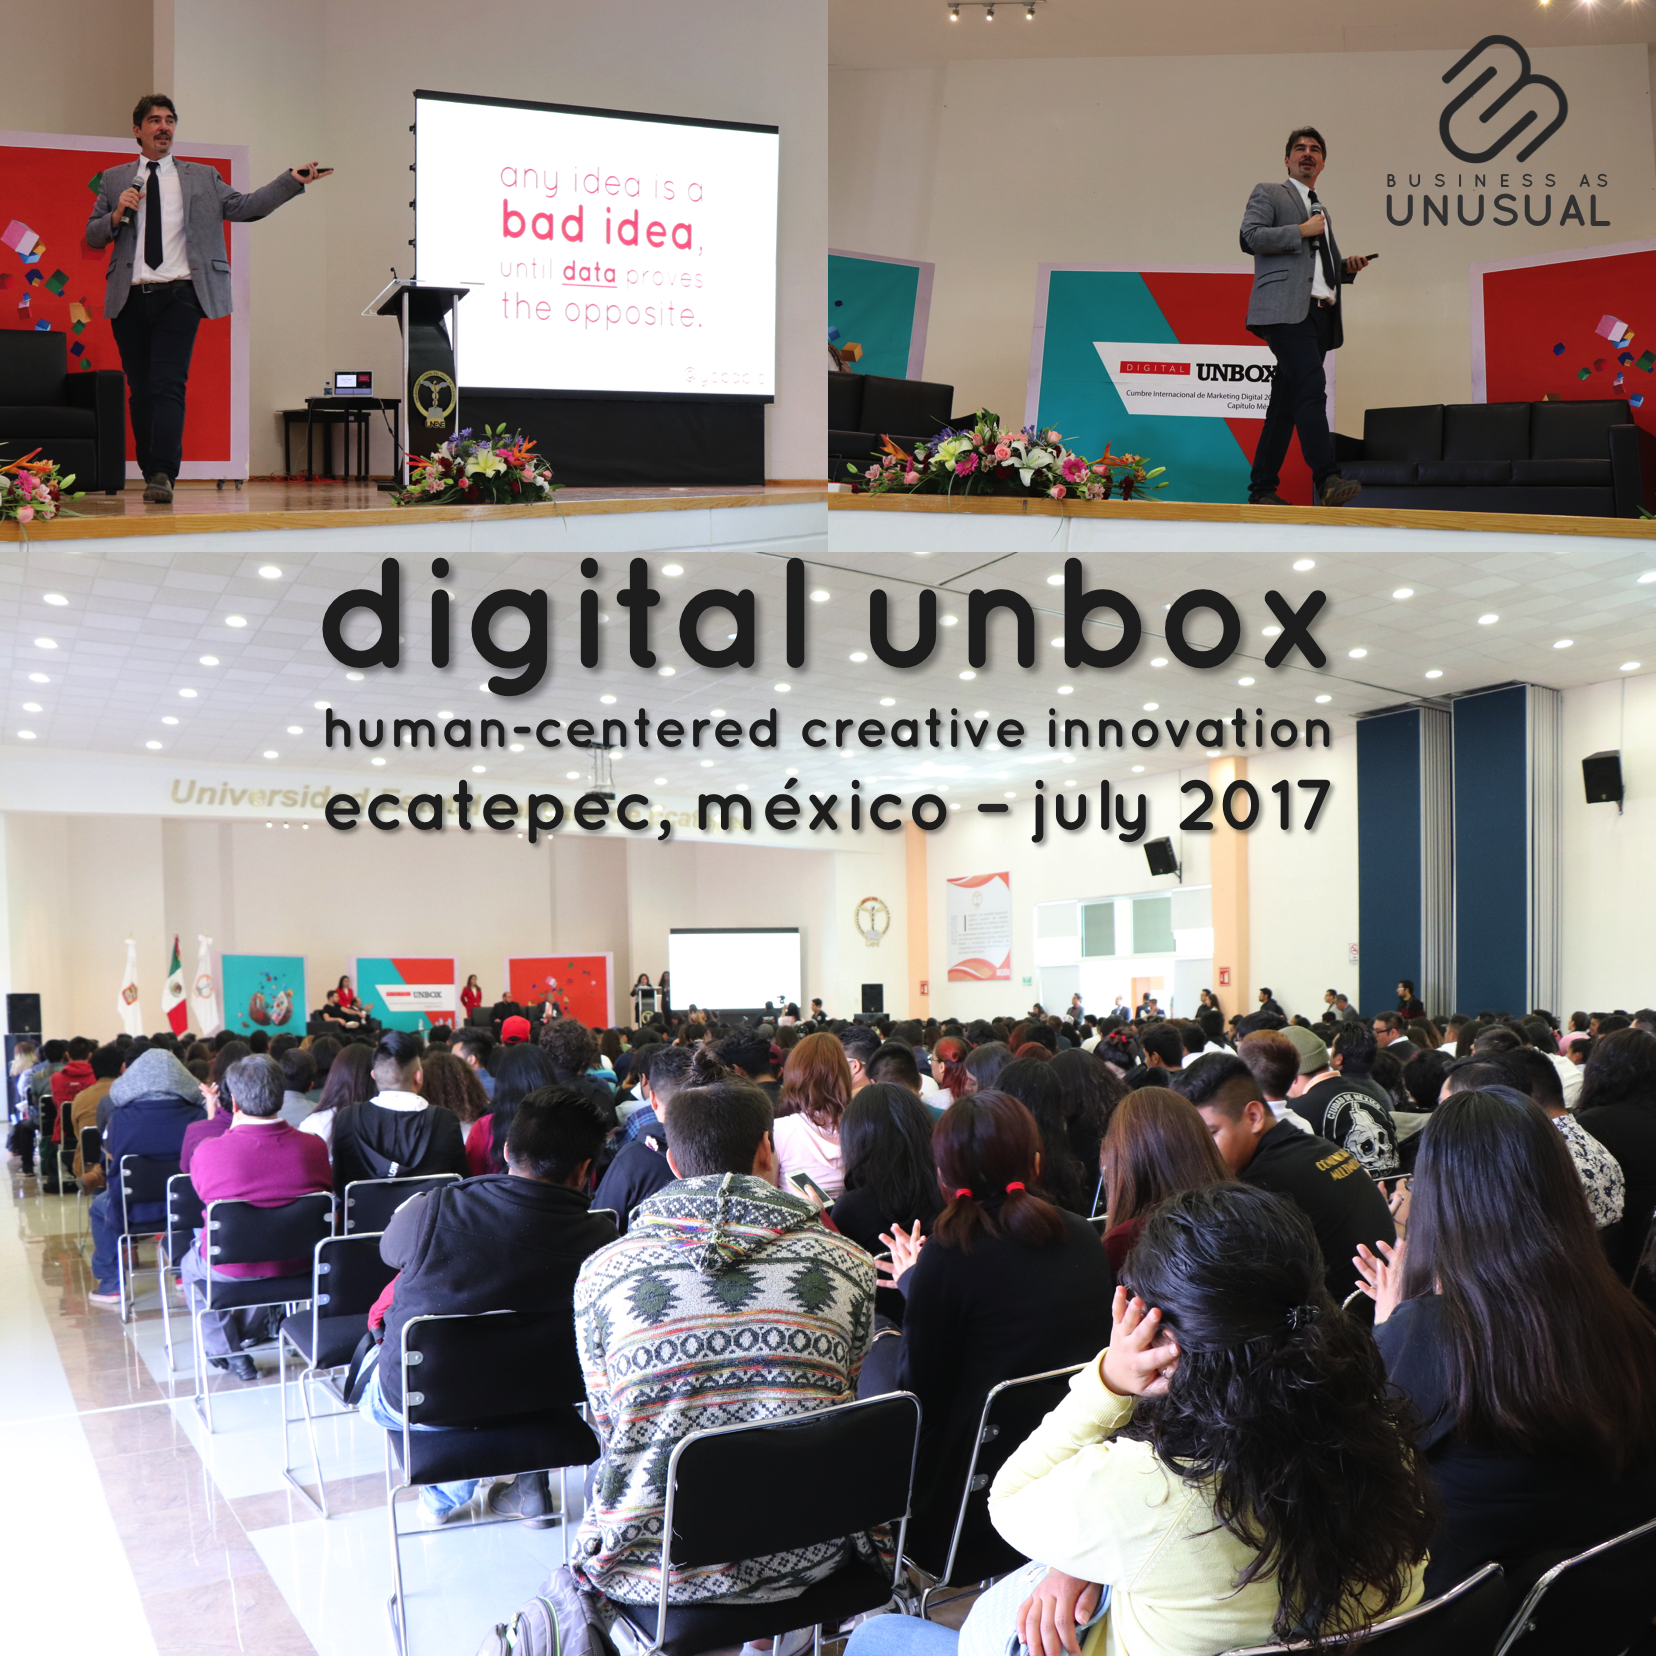 Universidad del Valle de Ecatepec (UNEVE) - Digital Unbox - Human-Centered Creative Innovation